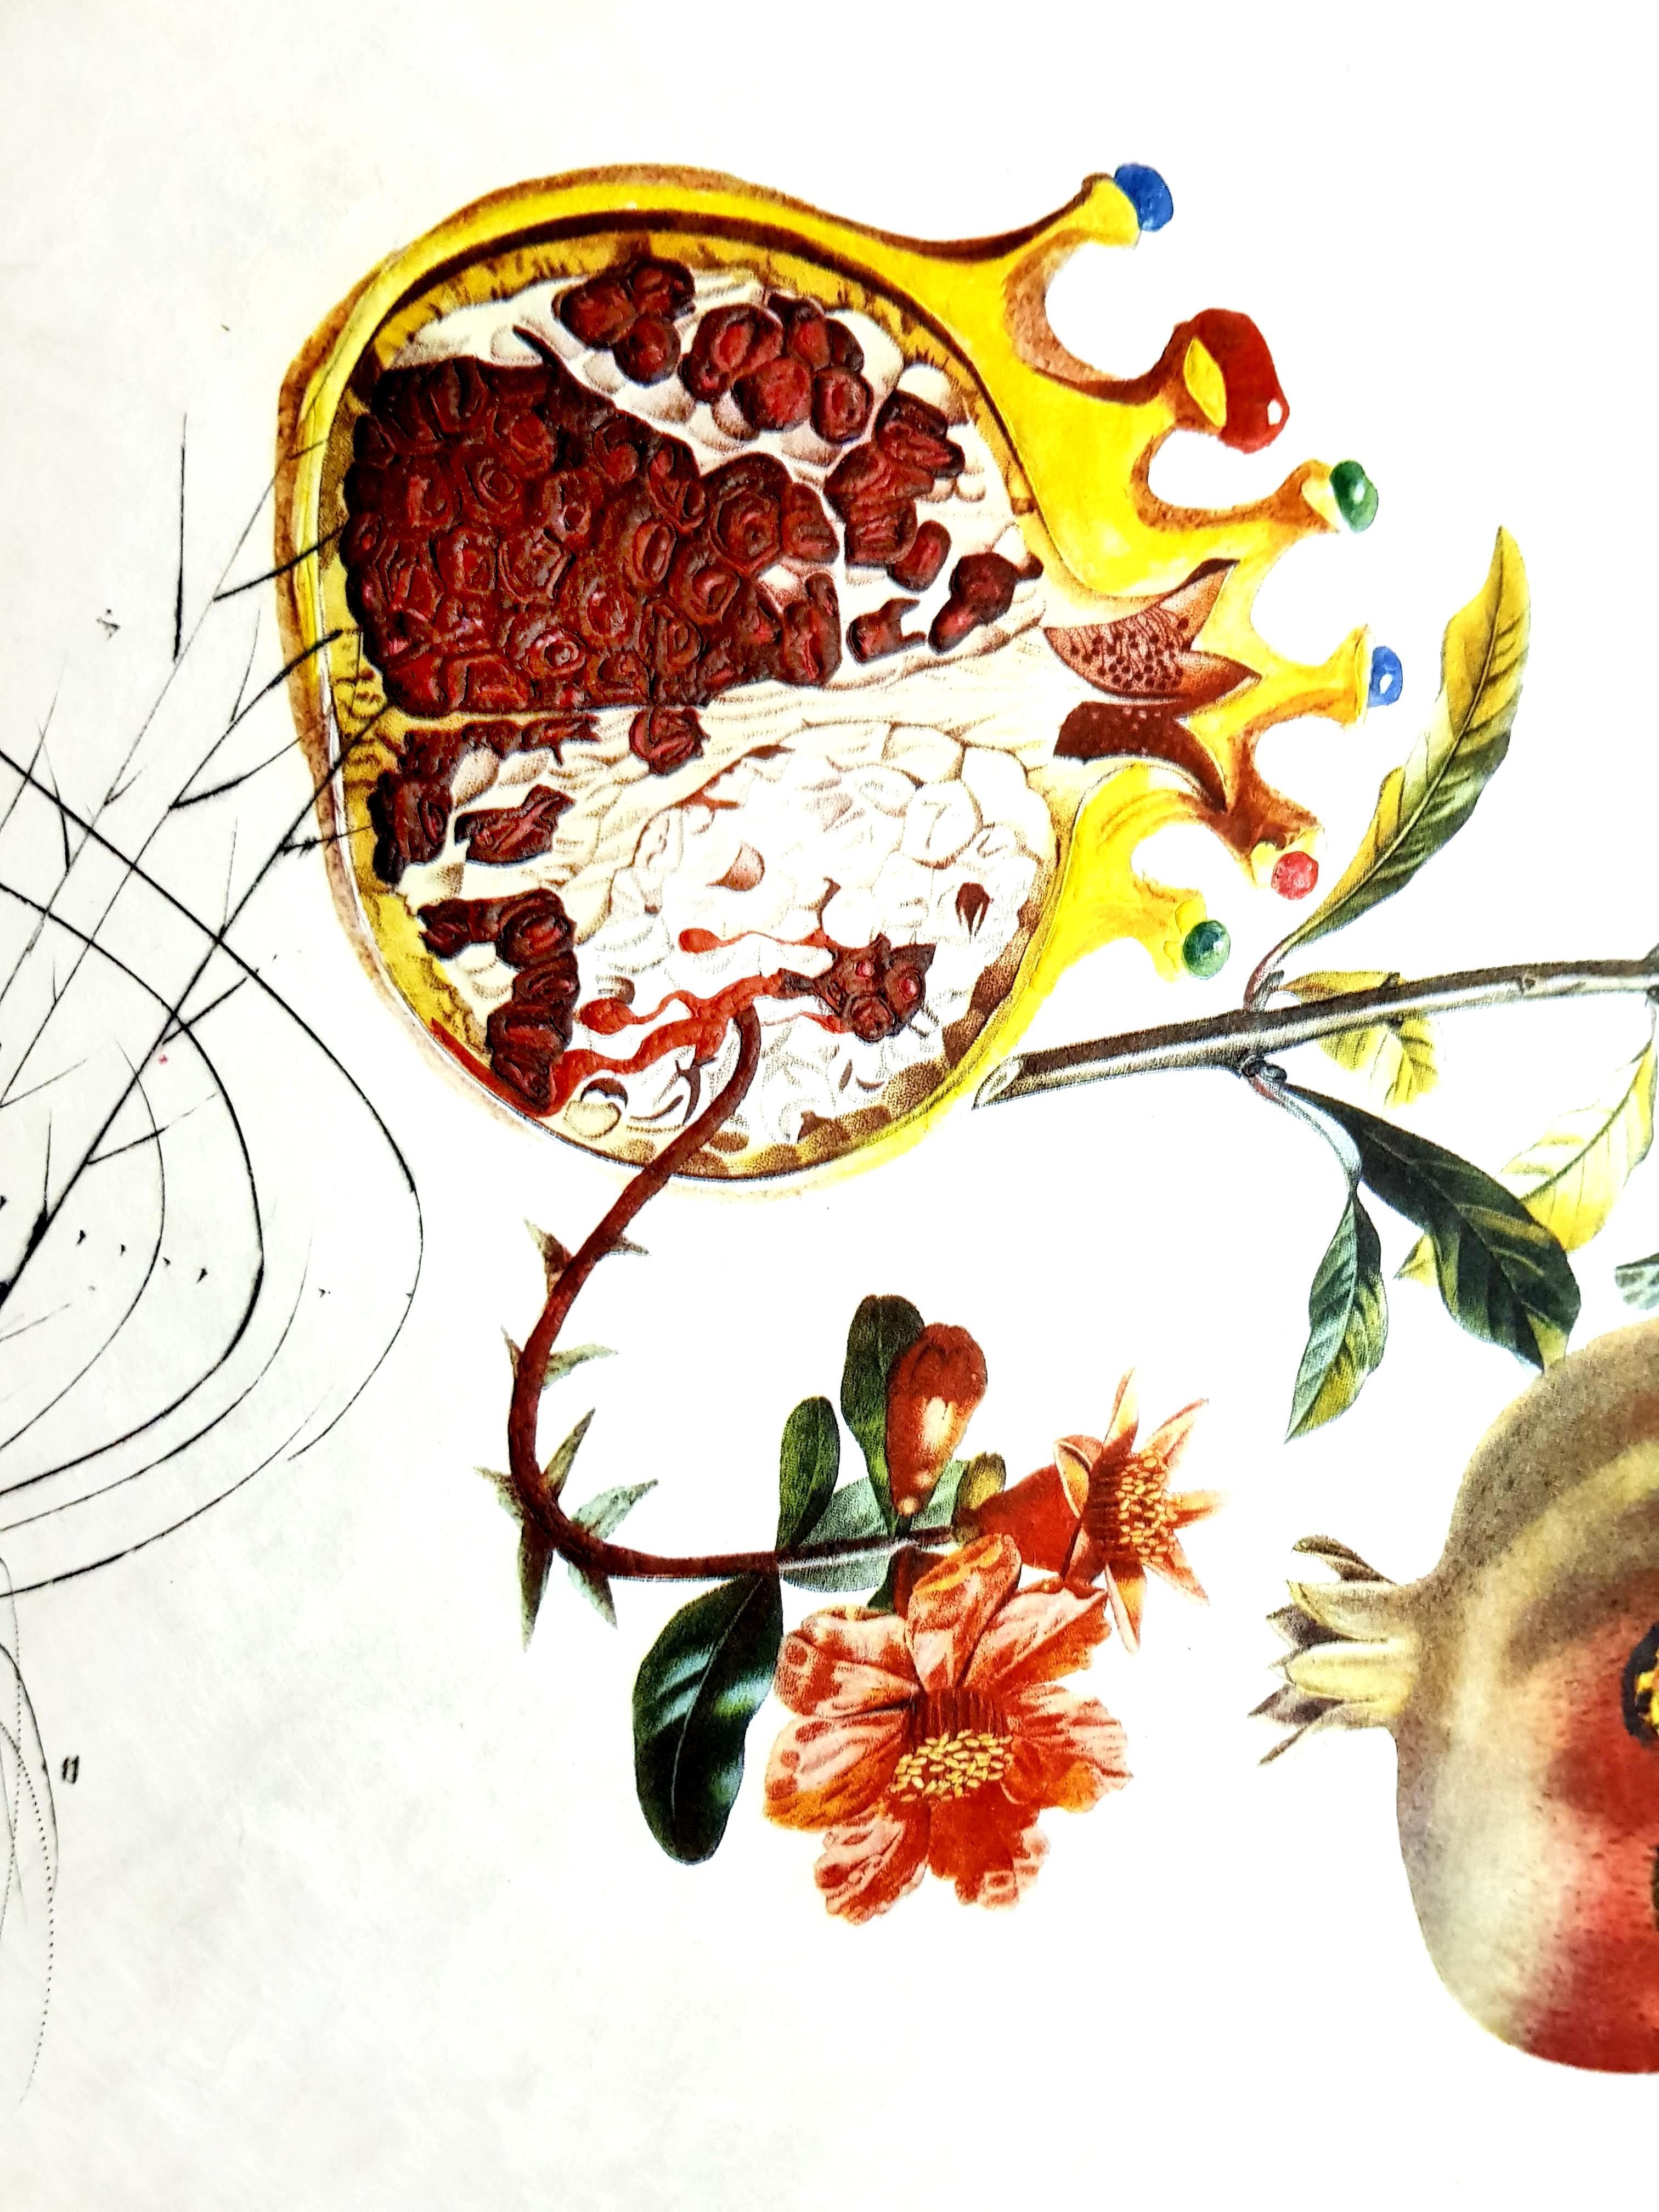 Salvador Dali - Angel and Pomegranate - Original Hand-Signed Lithograph - Surrealist Print by Salvador Dalí